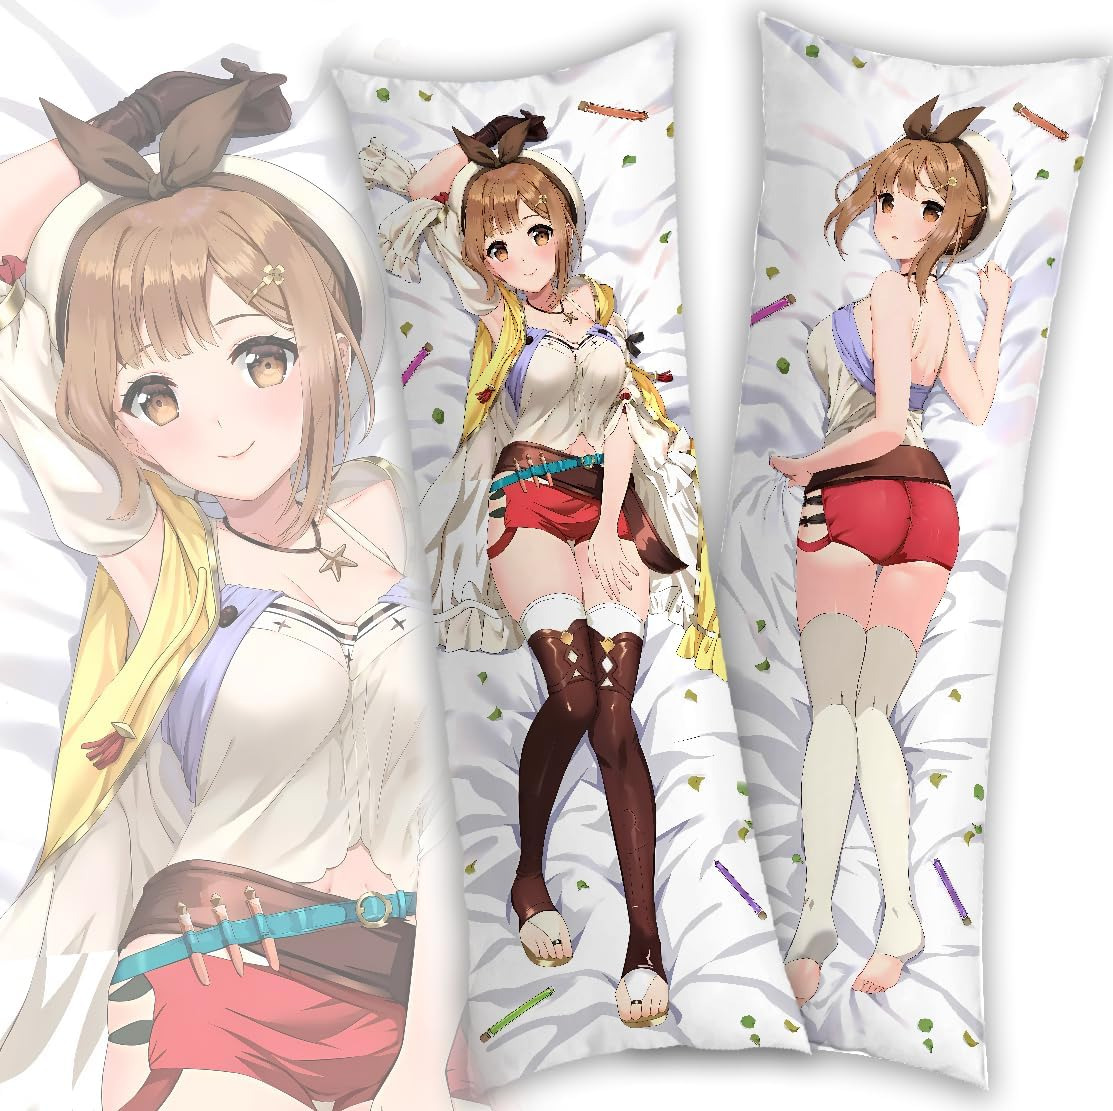 Magnificent Ryza Body PillowCase Anime Girl Dakimakura Soft Pillow Cover 19″X59″ Waifu on eBay